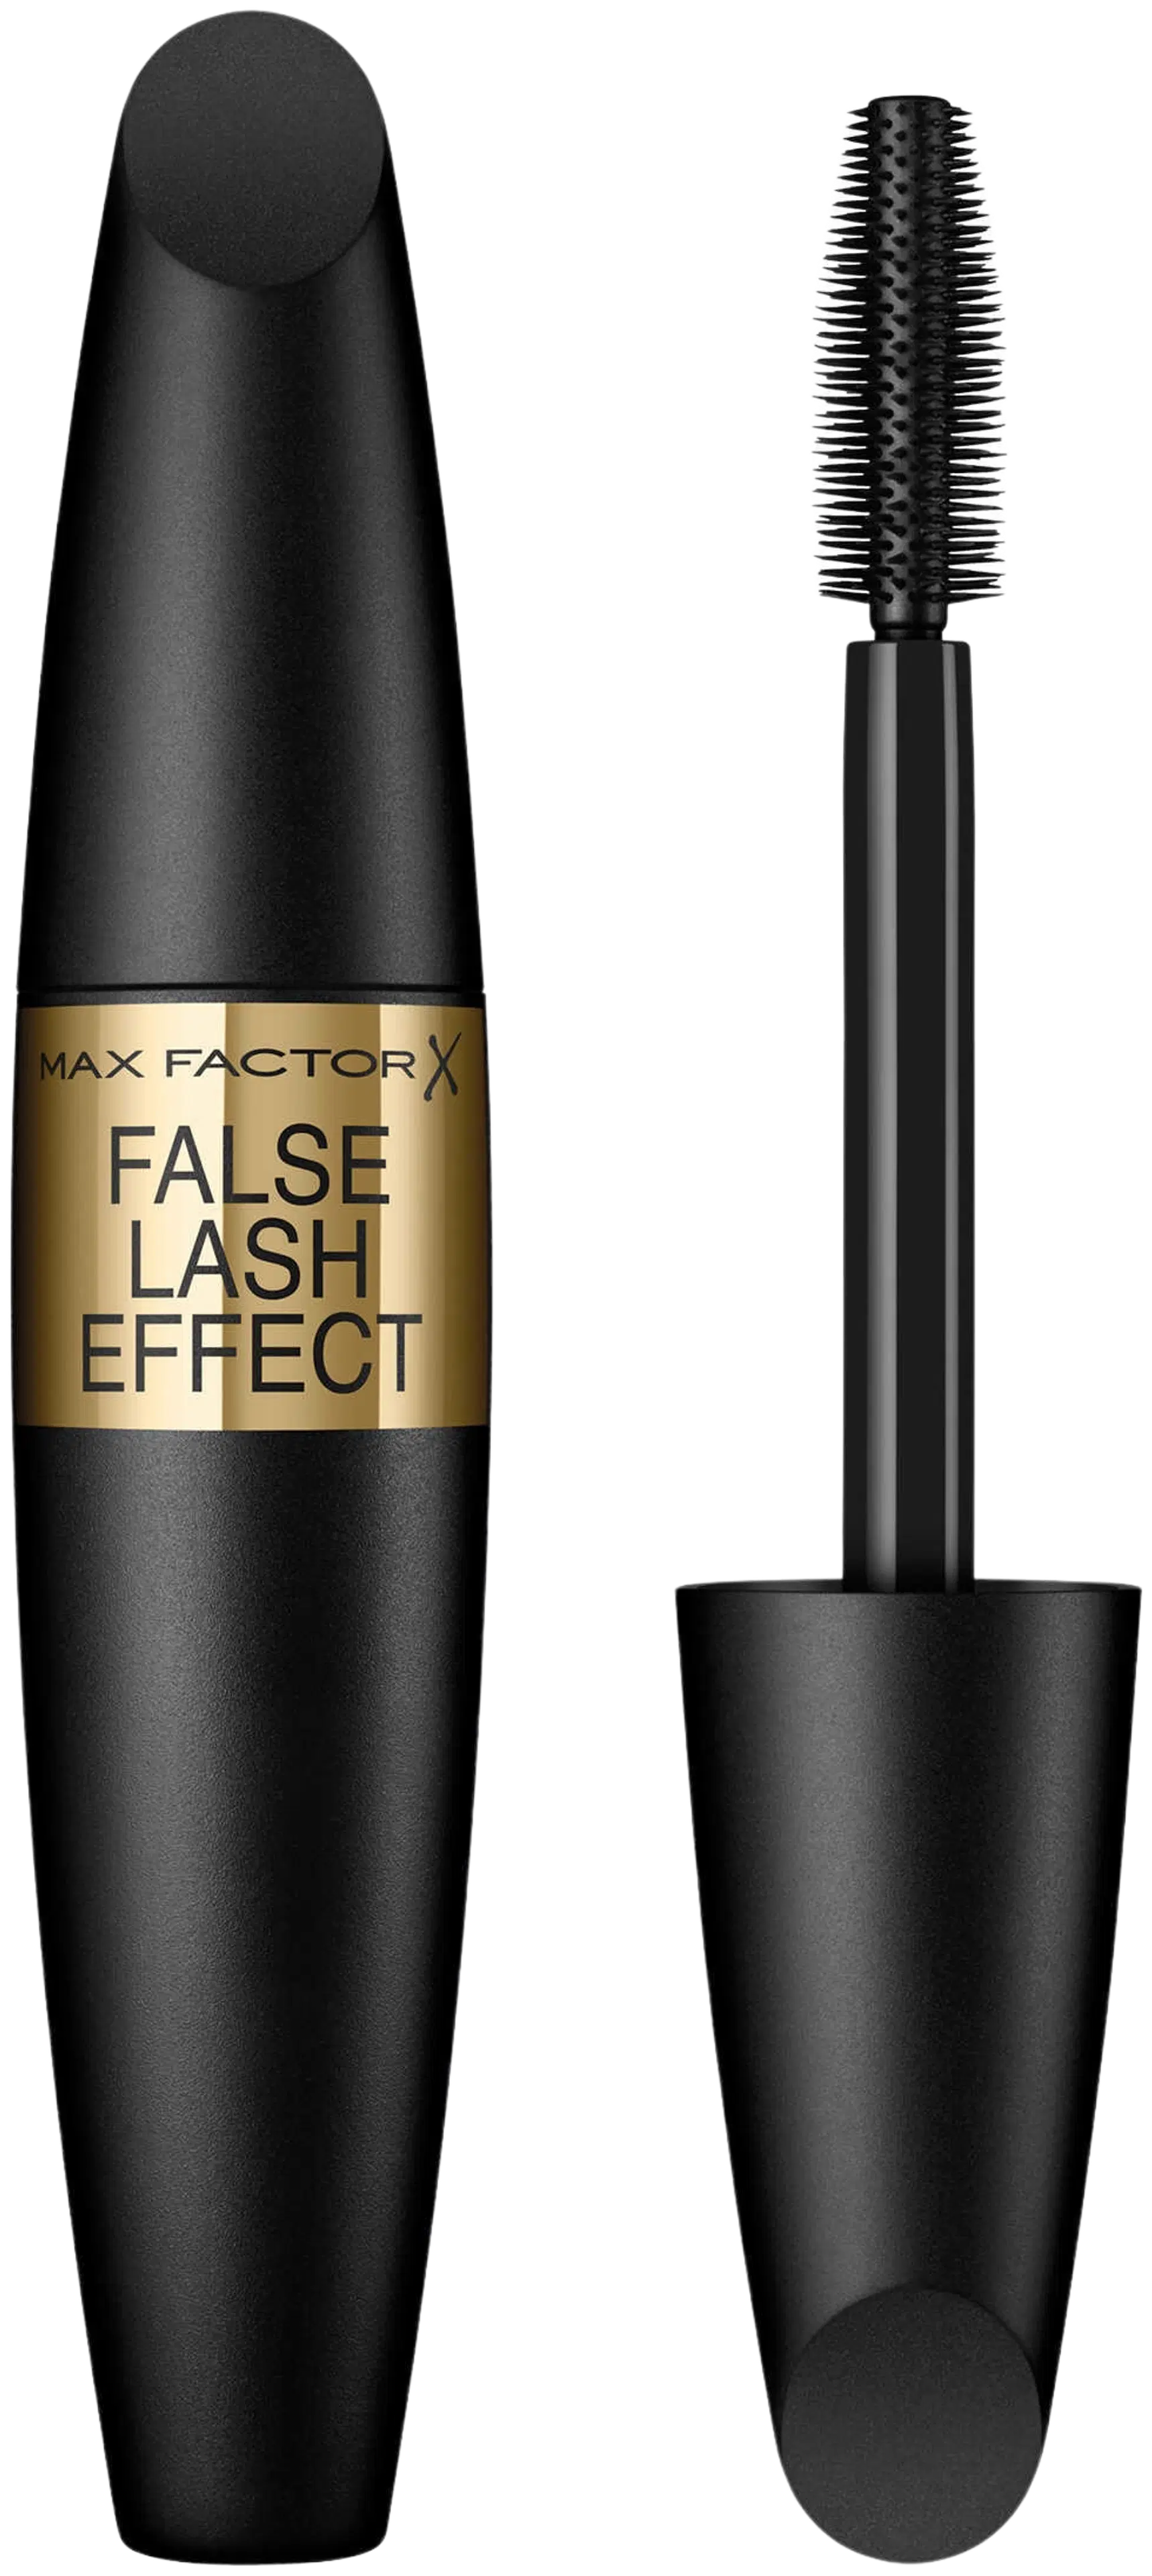 Max Factor False Lash Effect mascara Black 13,1 ml